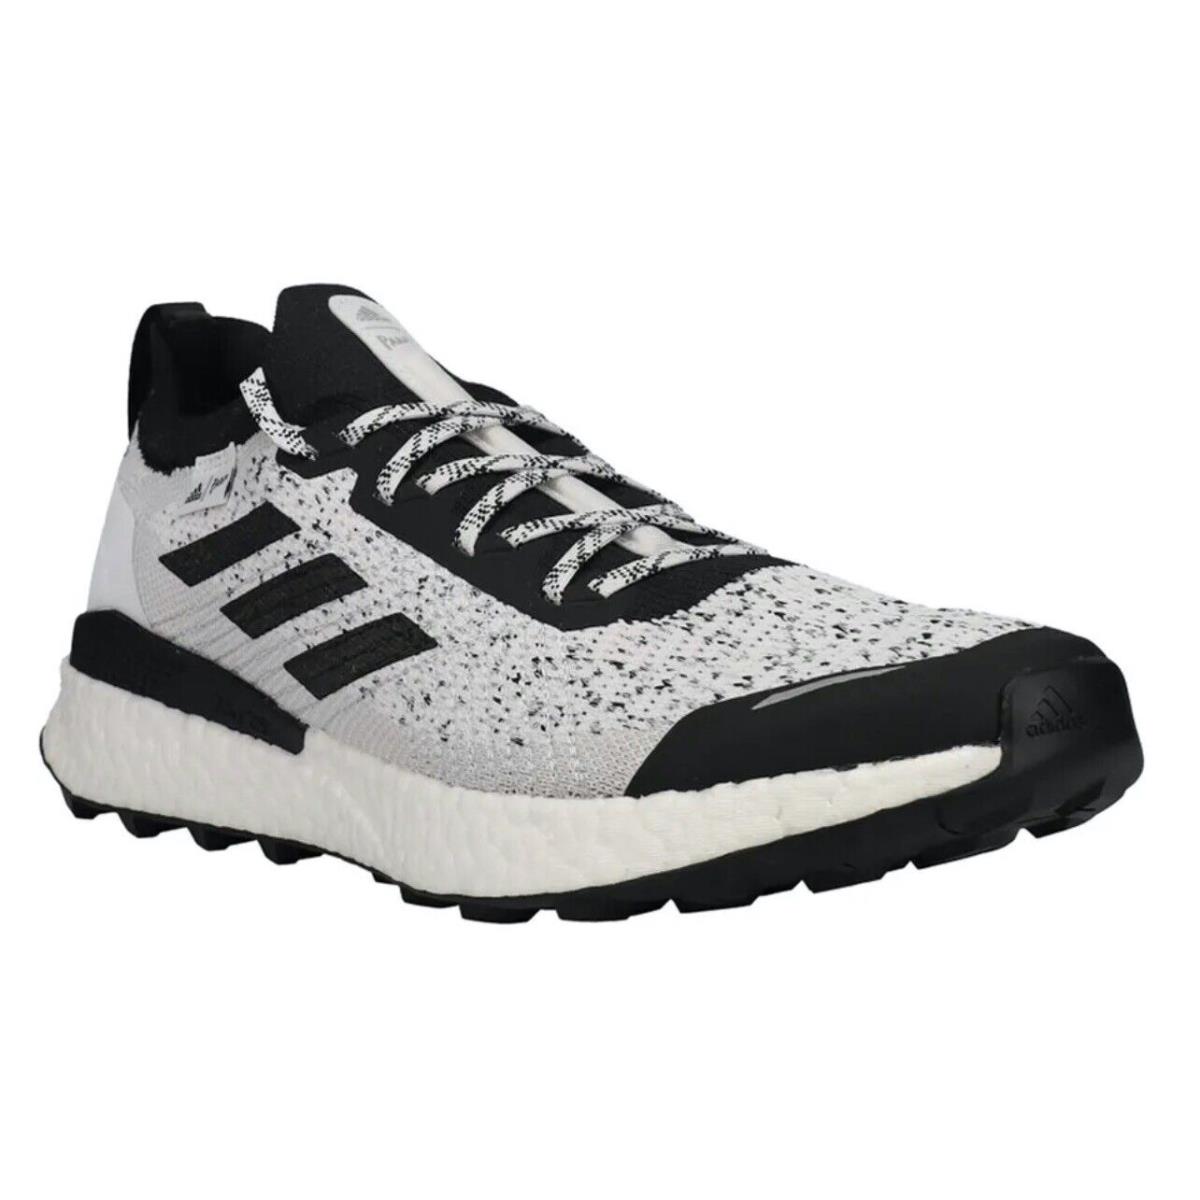 Adidas Terrex Two AP x Parley White /black Women Trail Running Shoes H02723